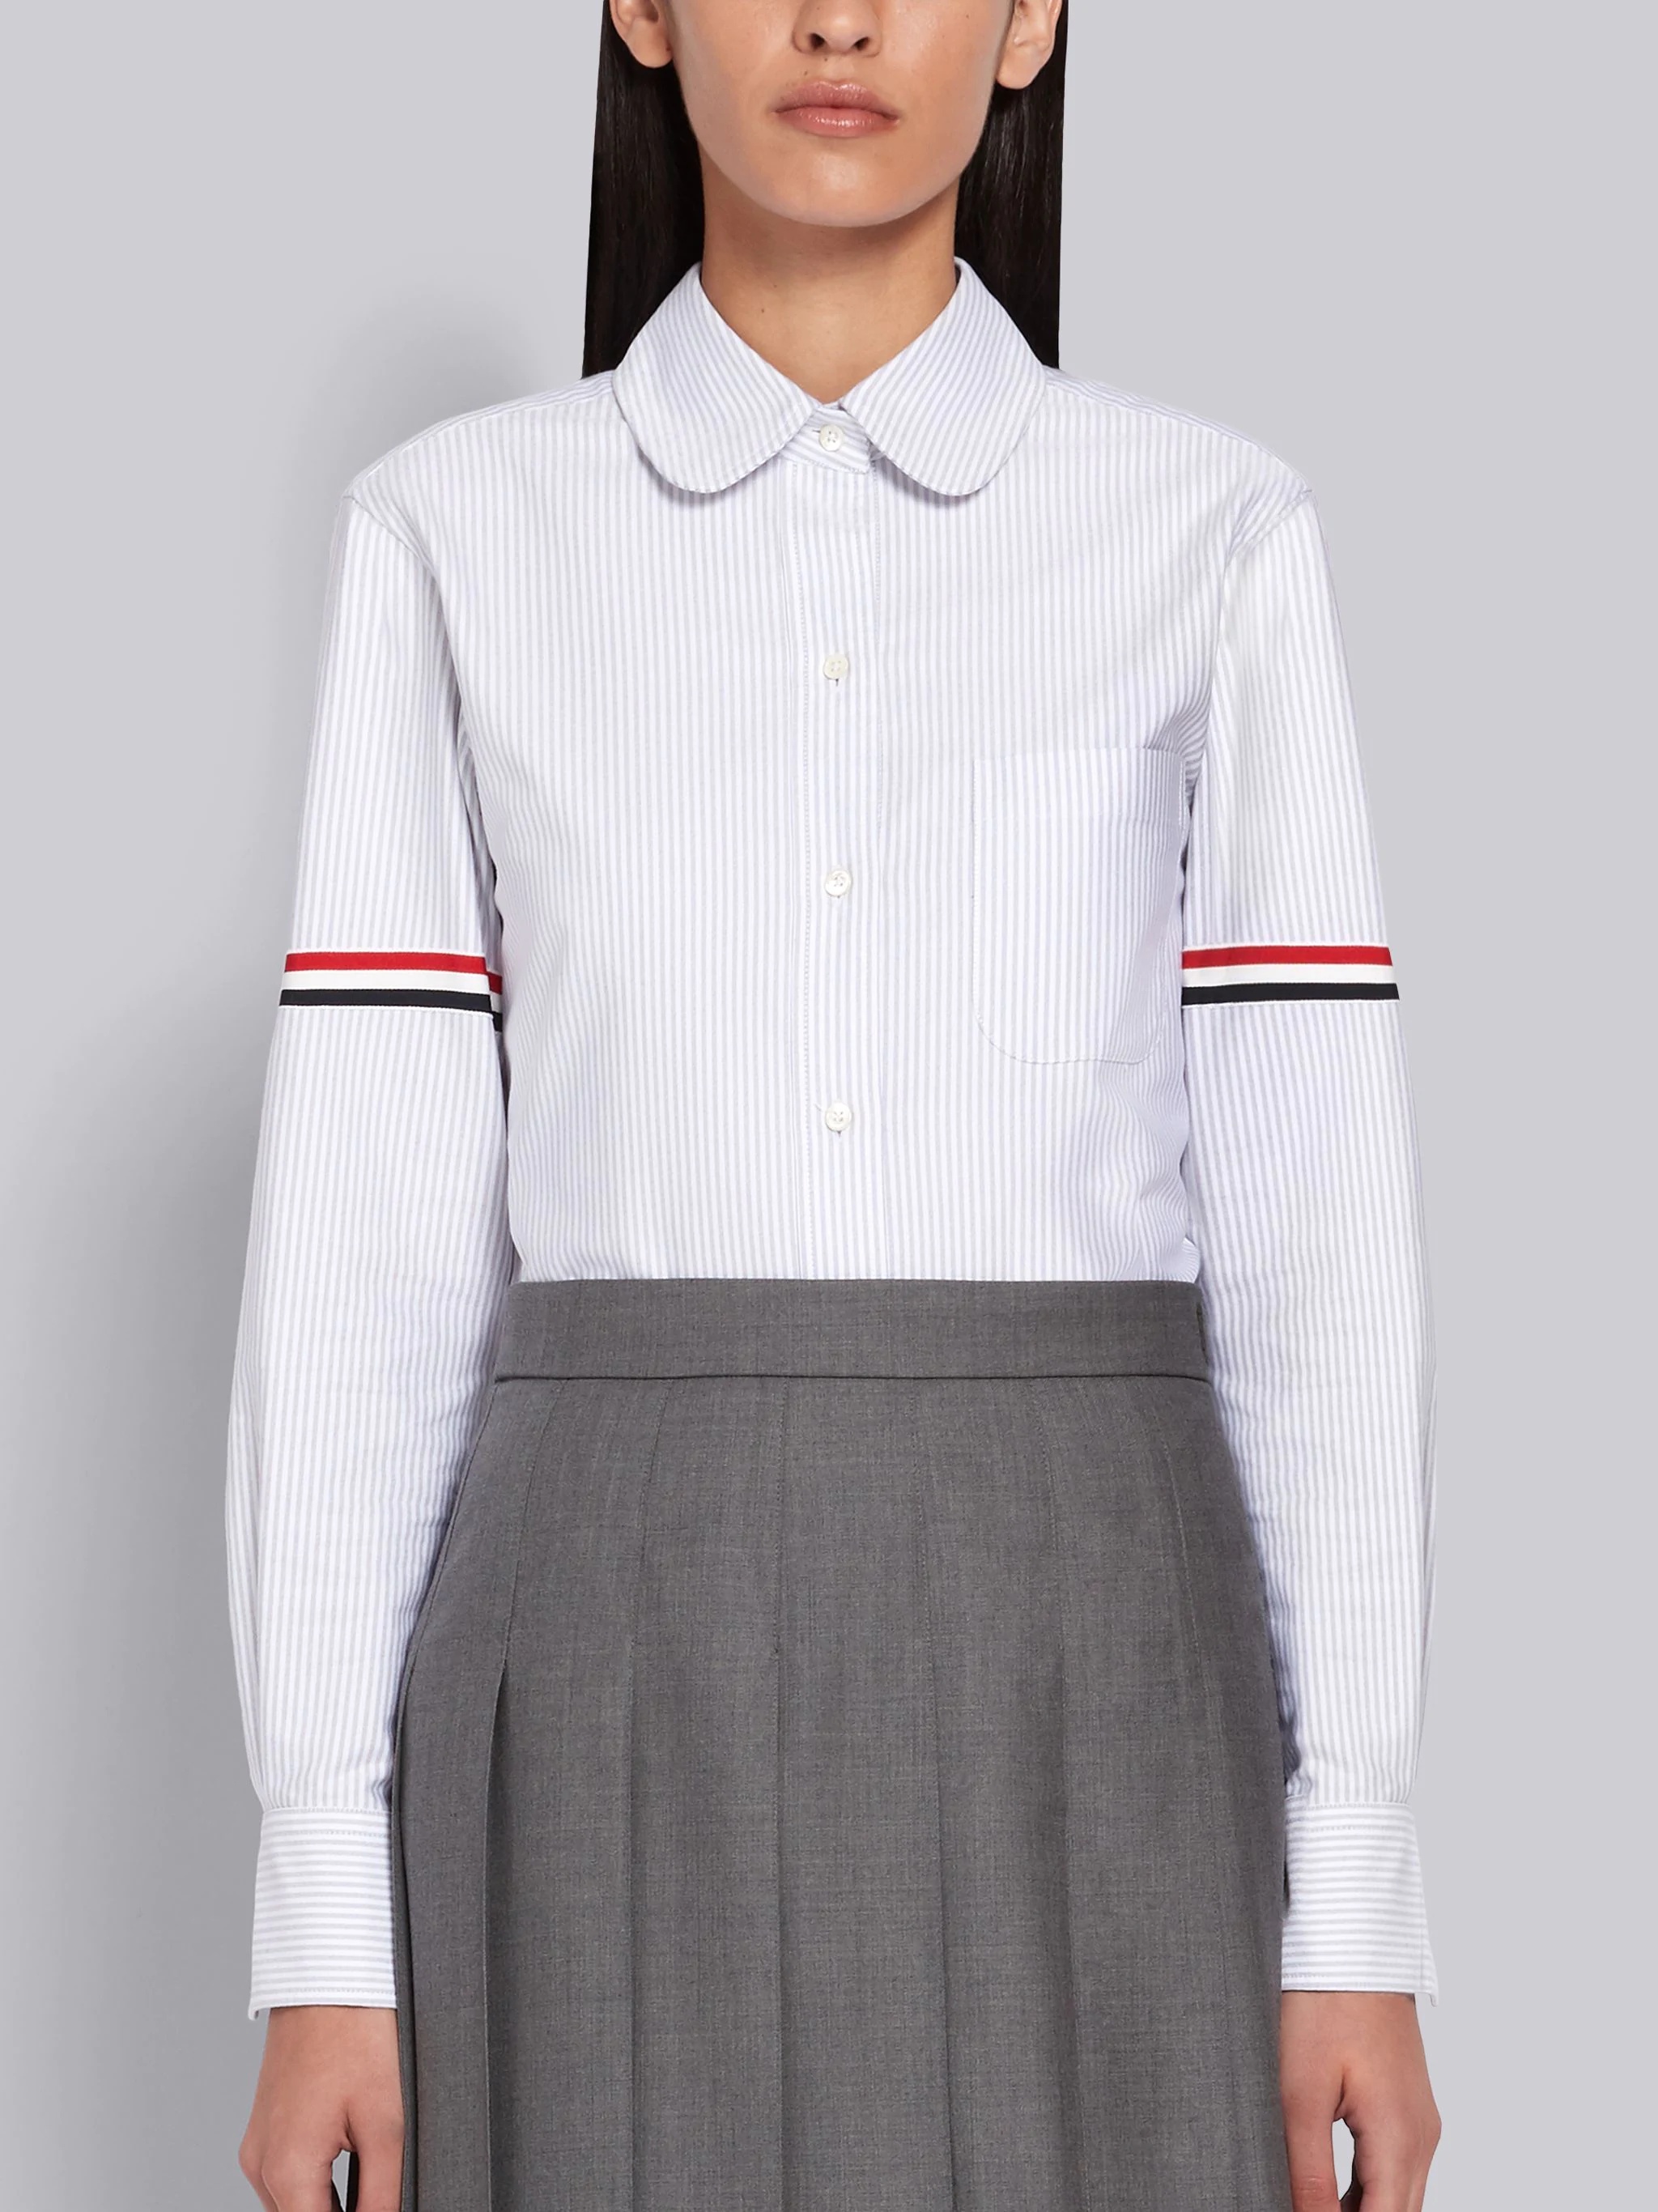 Medium Grey University Stripe Oxford Grosgrain Armband Long Sleeve Shirt - 1